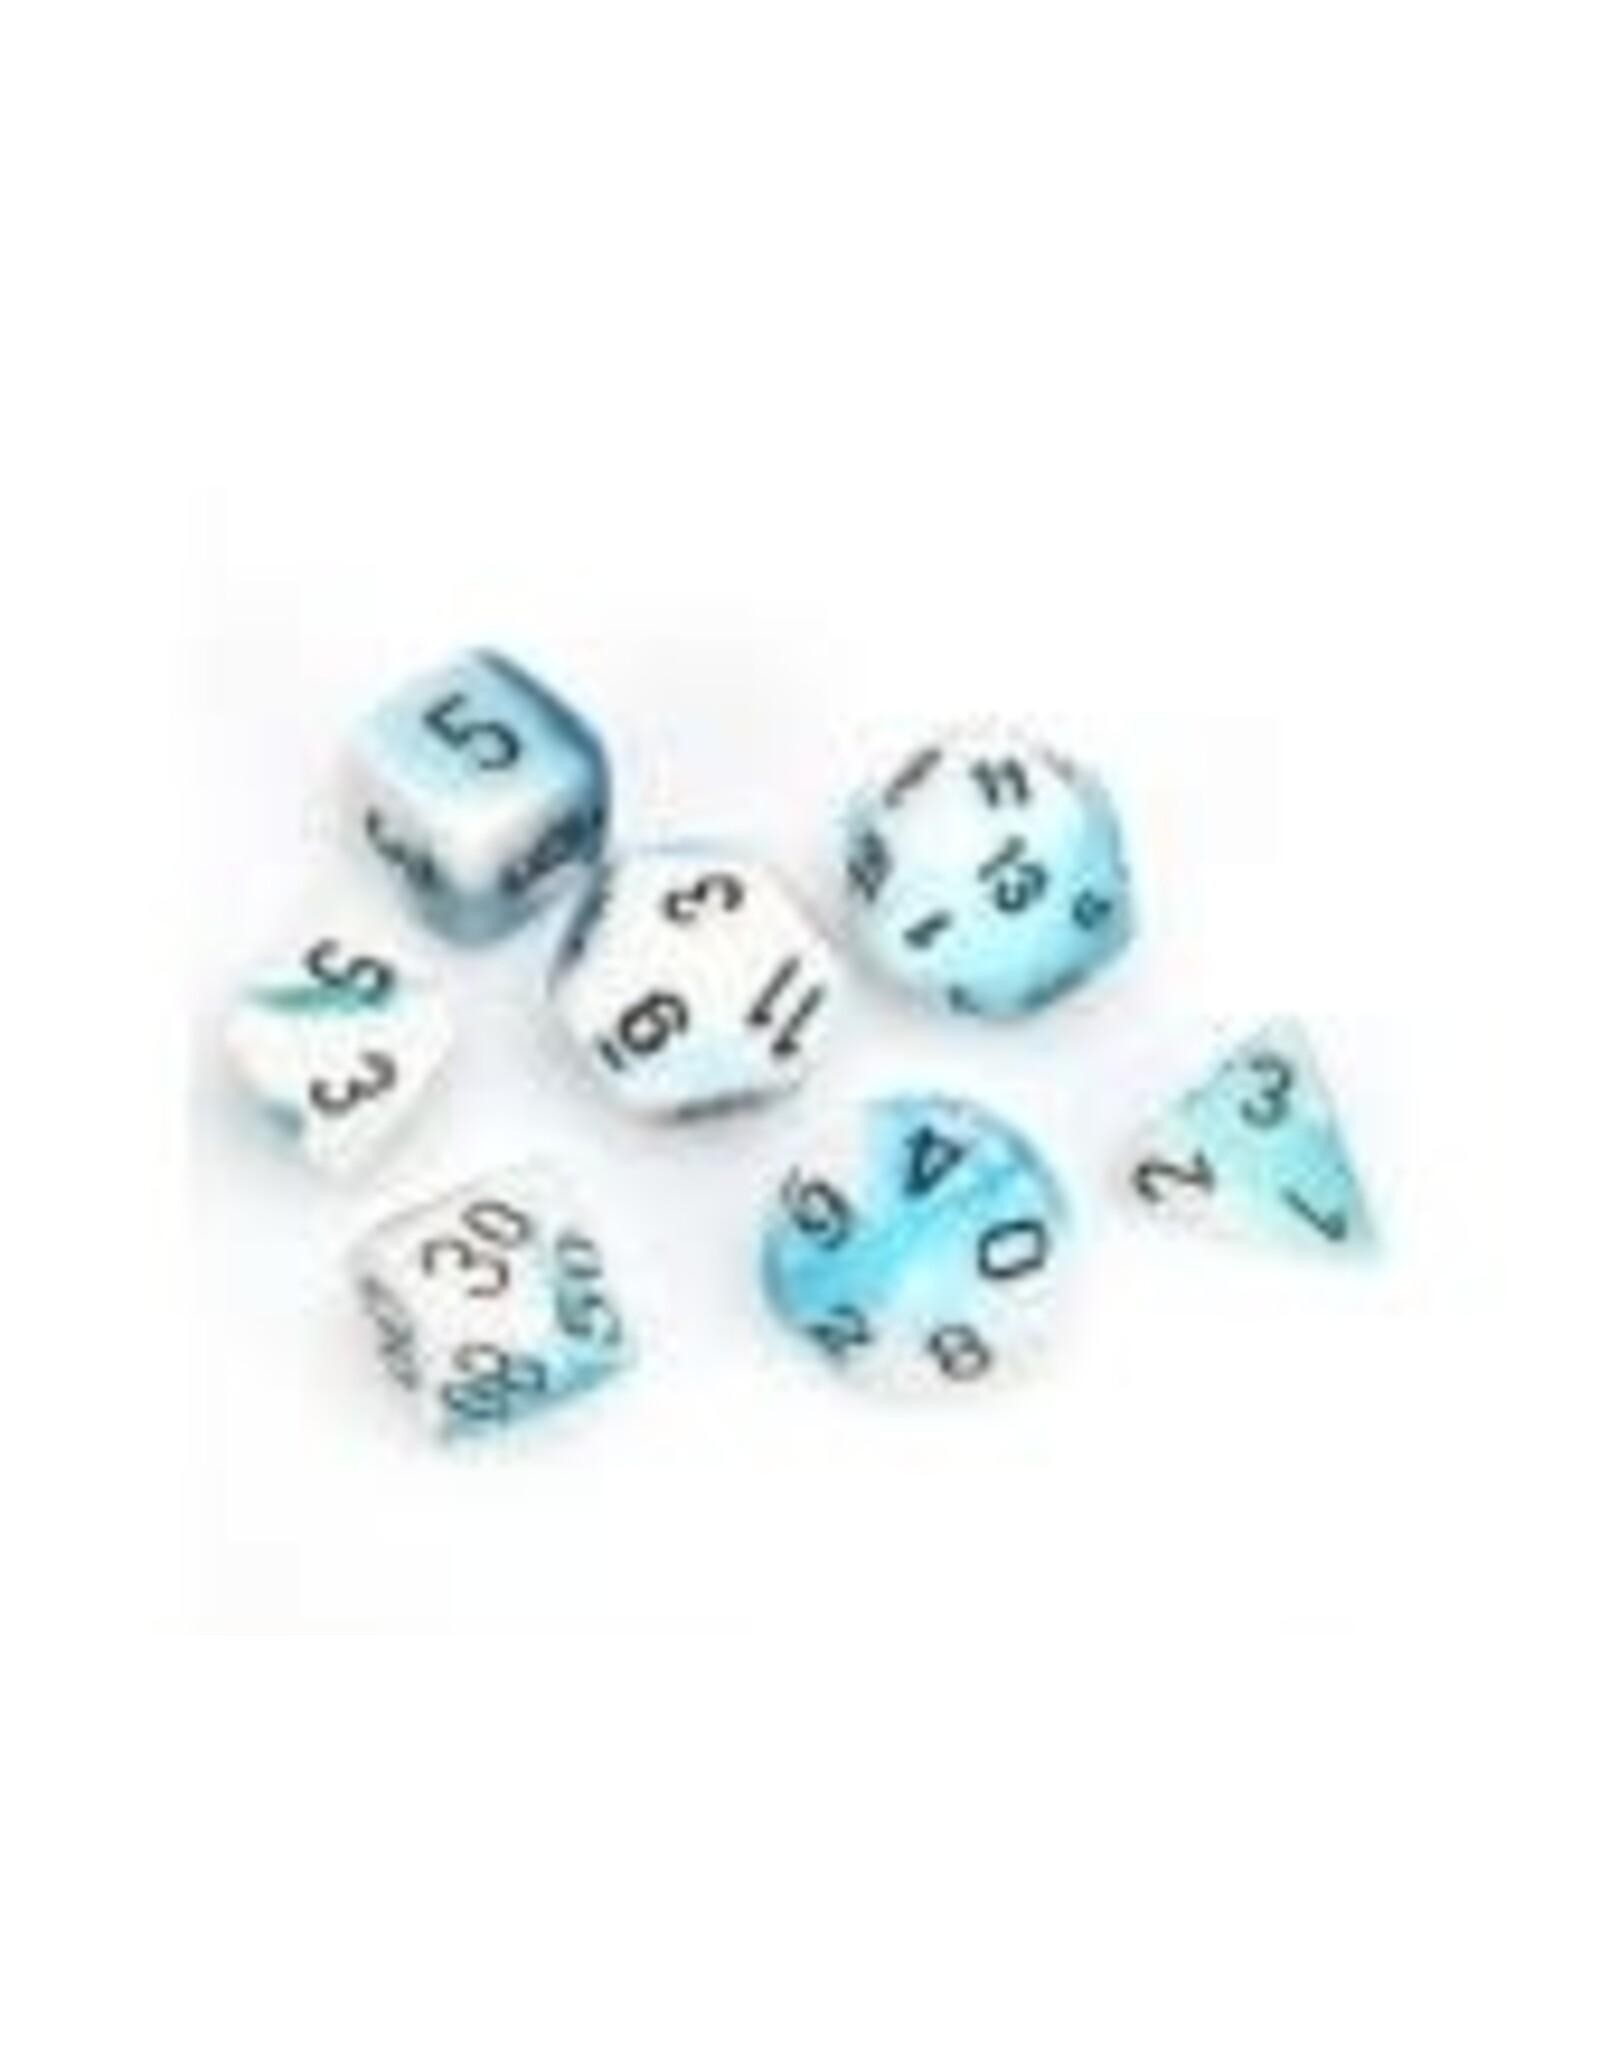 Chessex Teal-White/black Gemini Poly 7 dice set